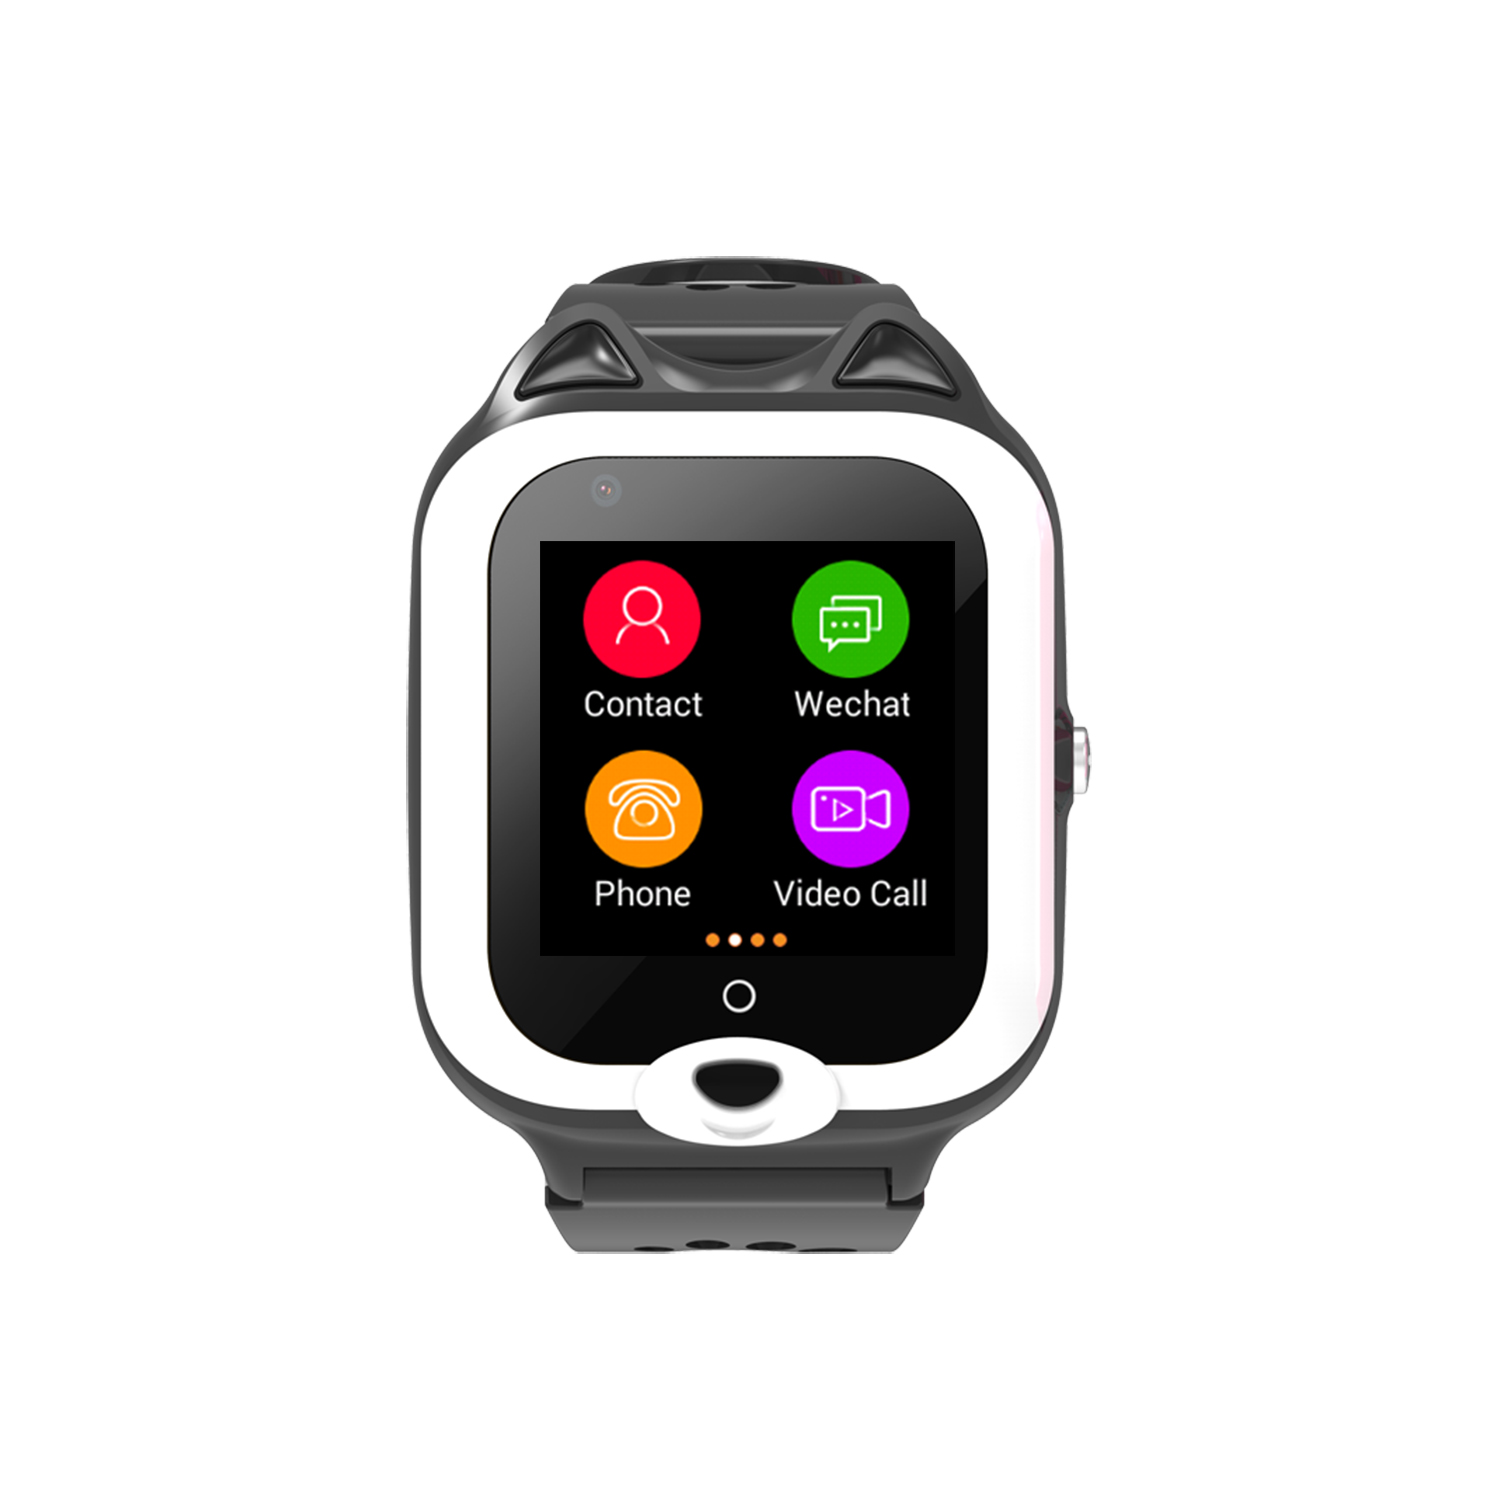 4G Waterproof Multi-languages Kids GPS Tracker watch Phone D47